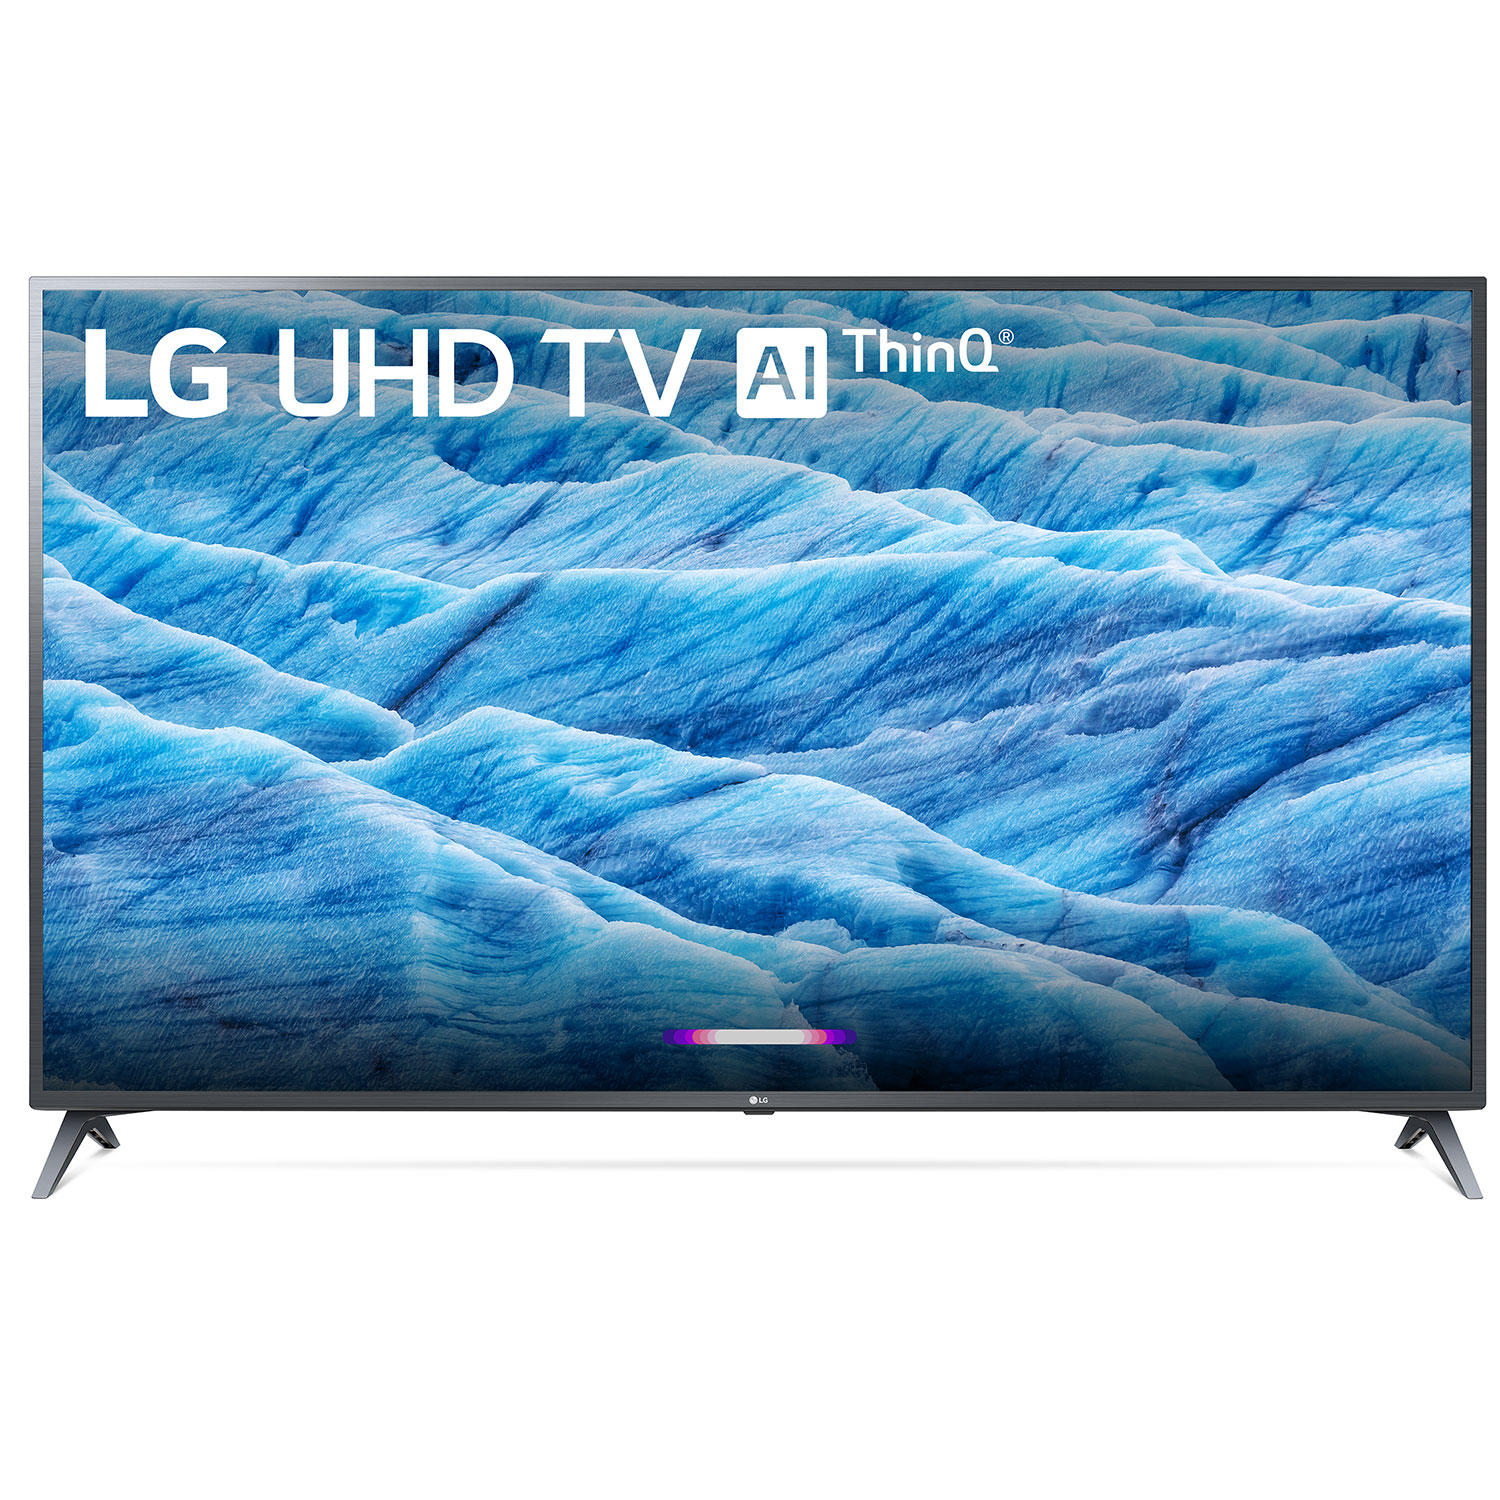 LG 70UM7370 70″ 4K Ultra HD Smart HDR TV with AI ThinQ